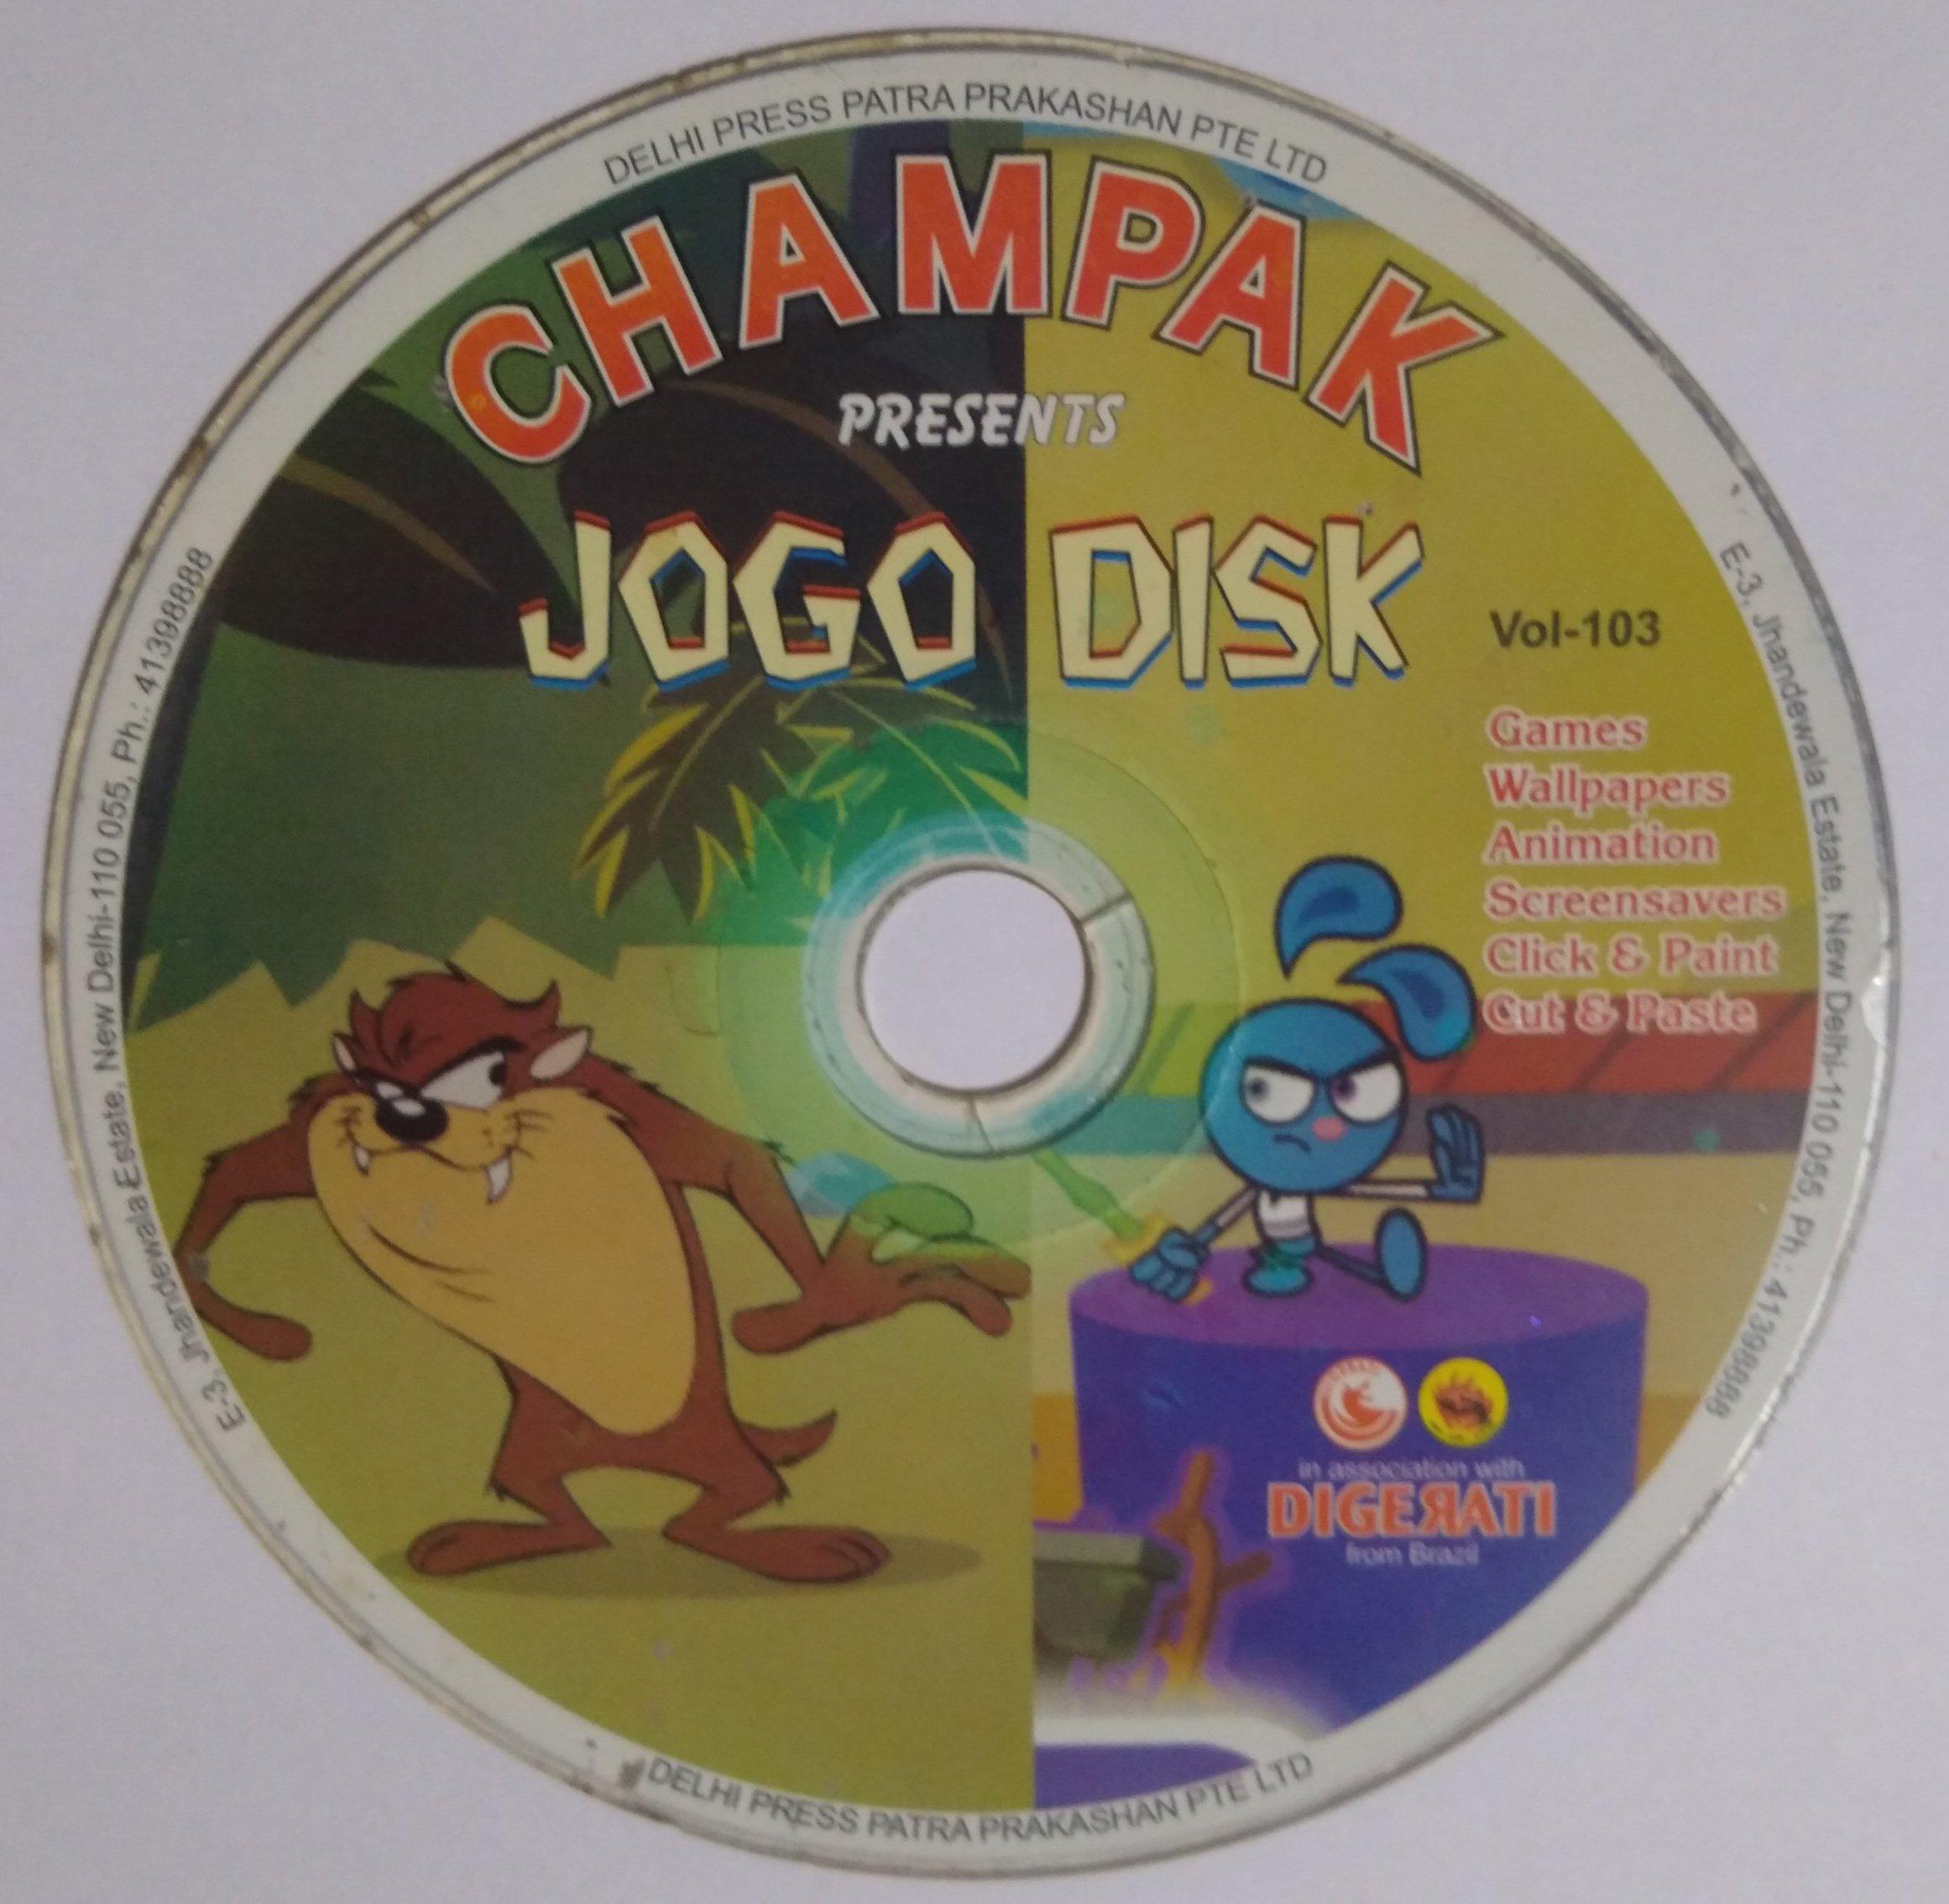 Champak/Digerati Jogo Disk Volume 146 : Free Download, Borrow, and